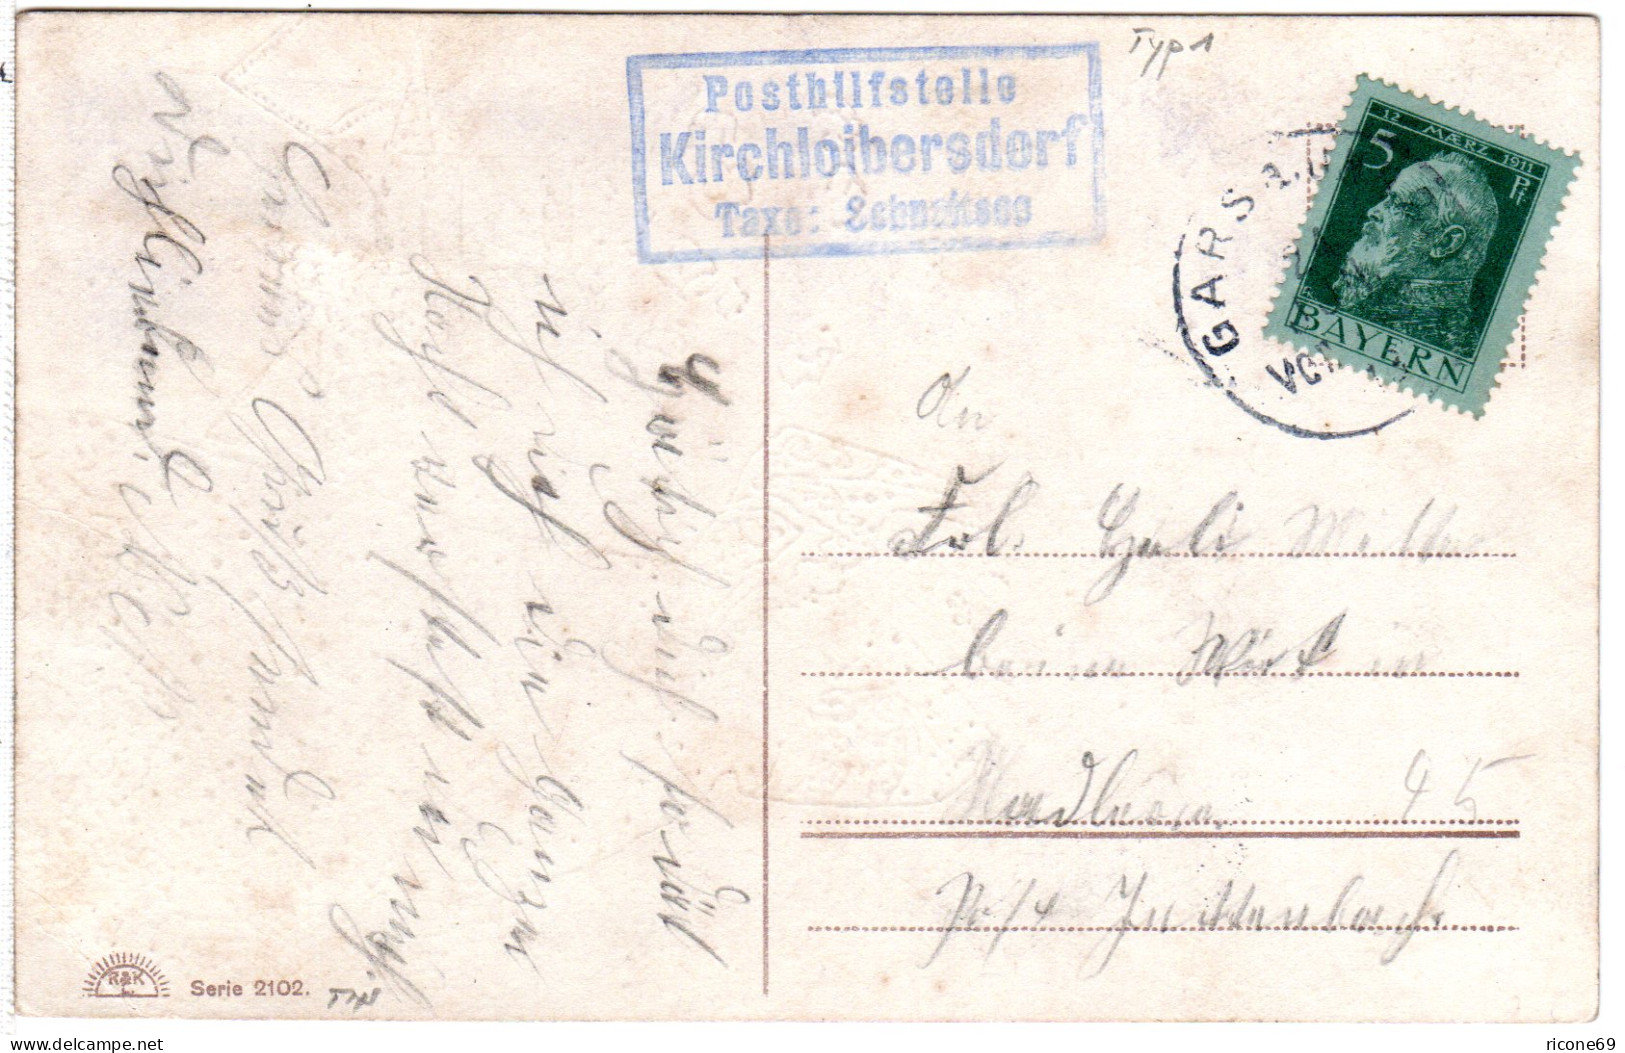 Bayern 1913, Posthilfstelle KIRCHLOIBERSDORF Taxe Schnaitsee Auf Karte M. 5 Pf. - Lettres & Documents